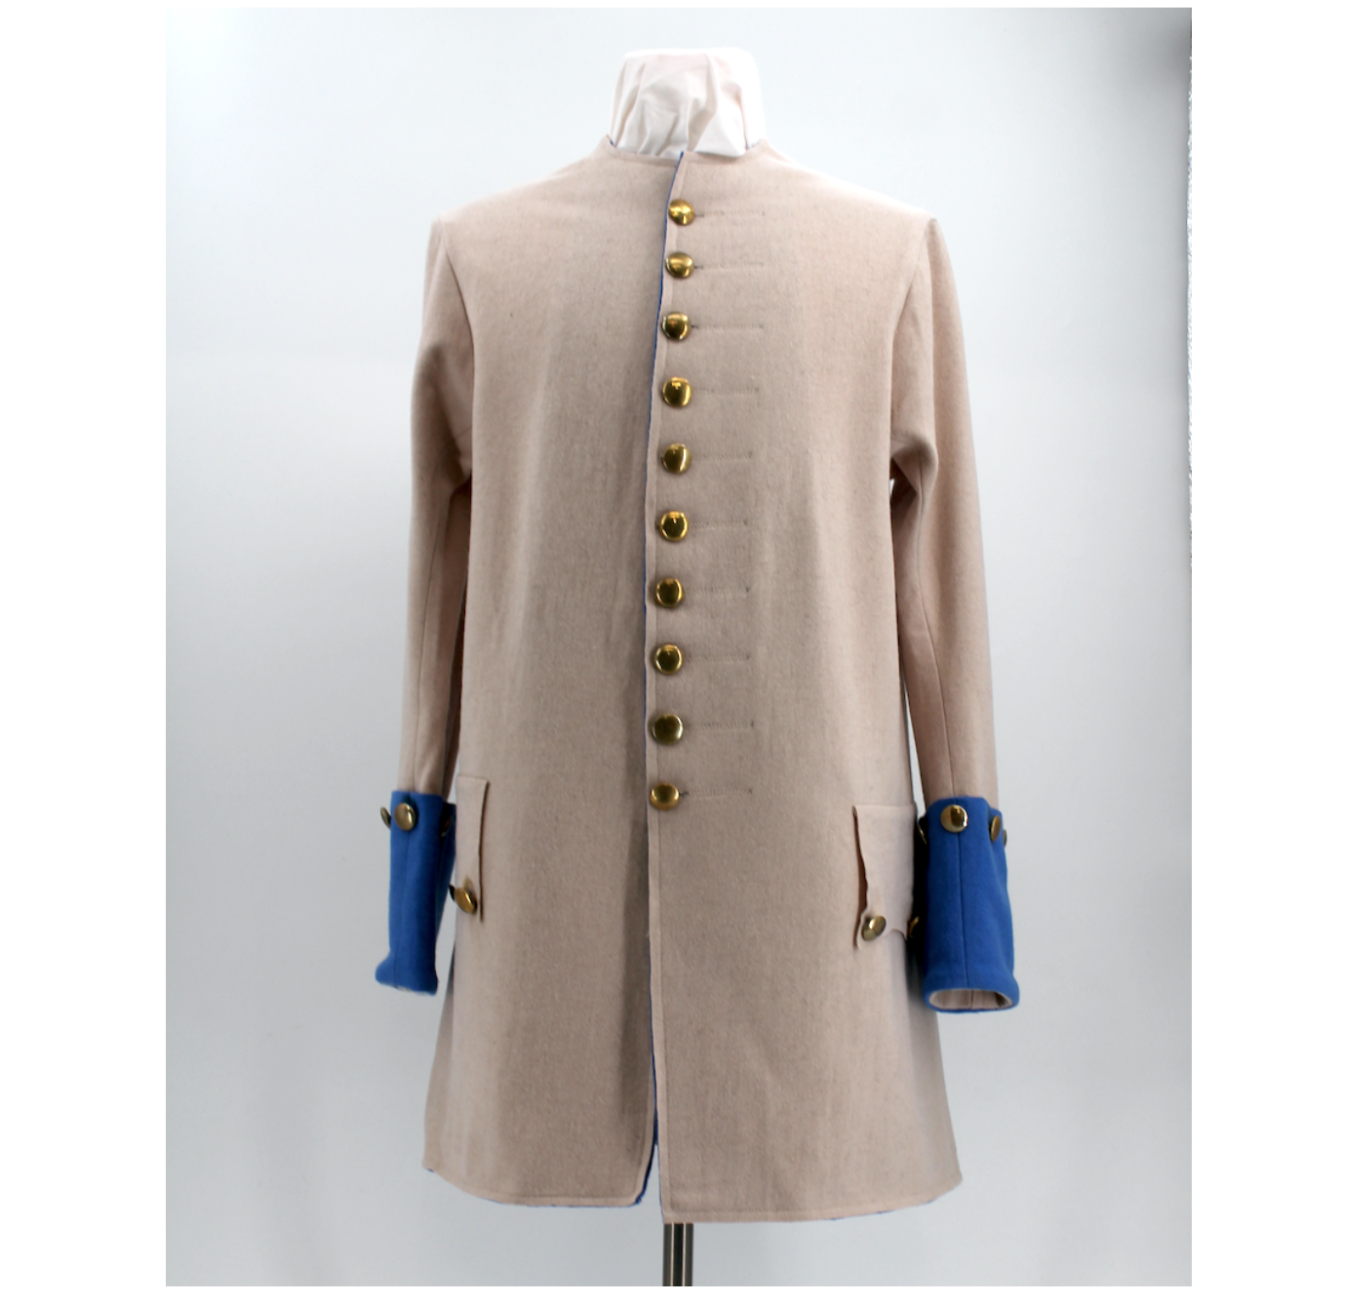 Justaucorps Coat Style French Military Fashion 1755